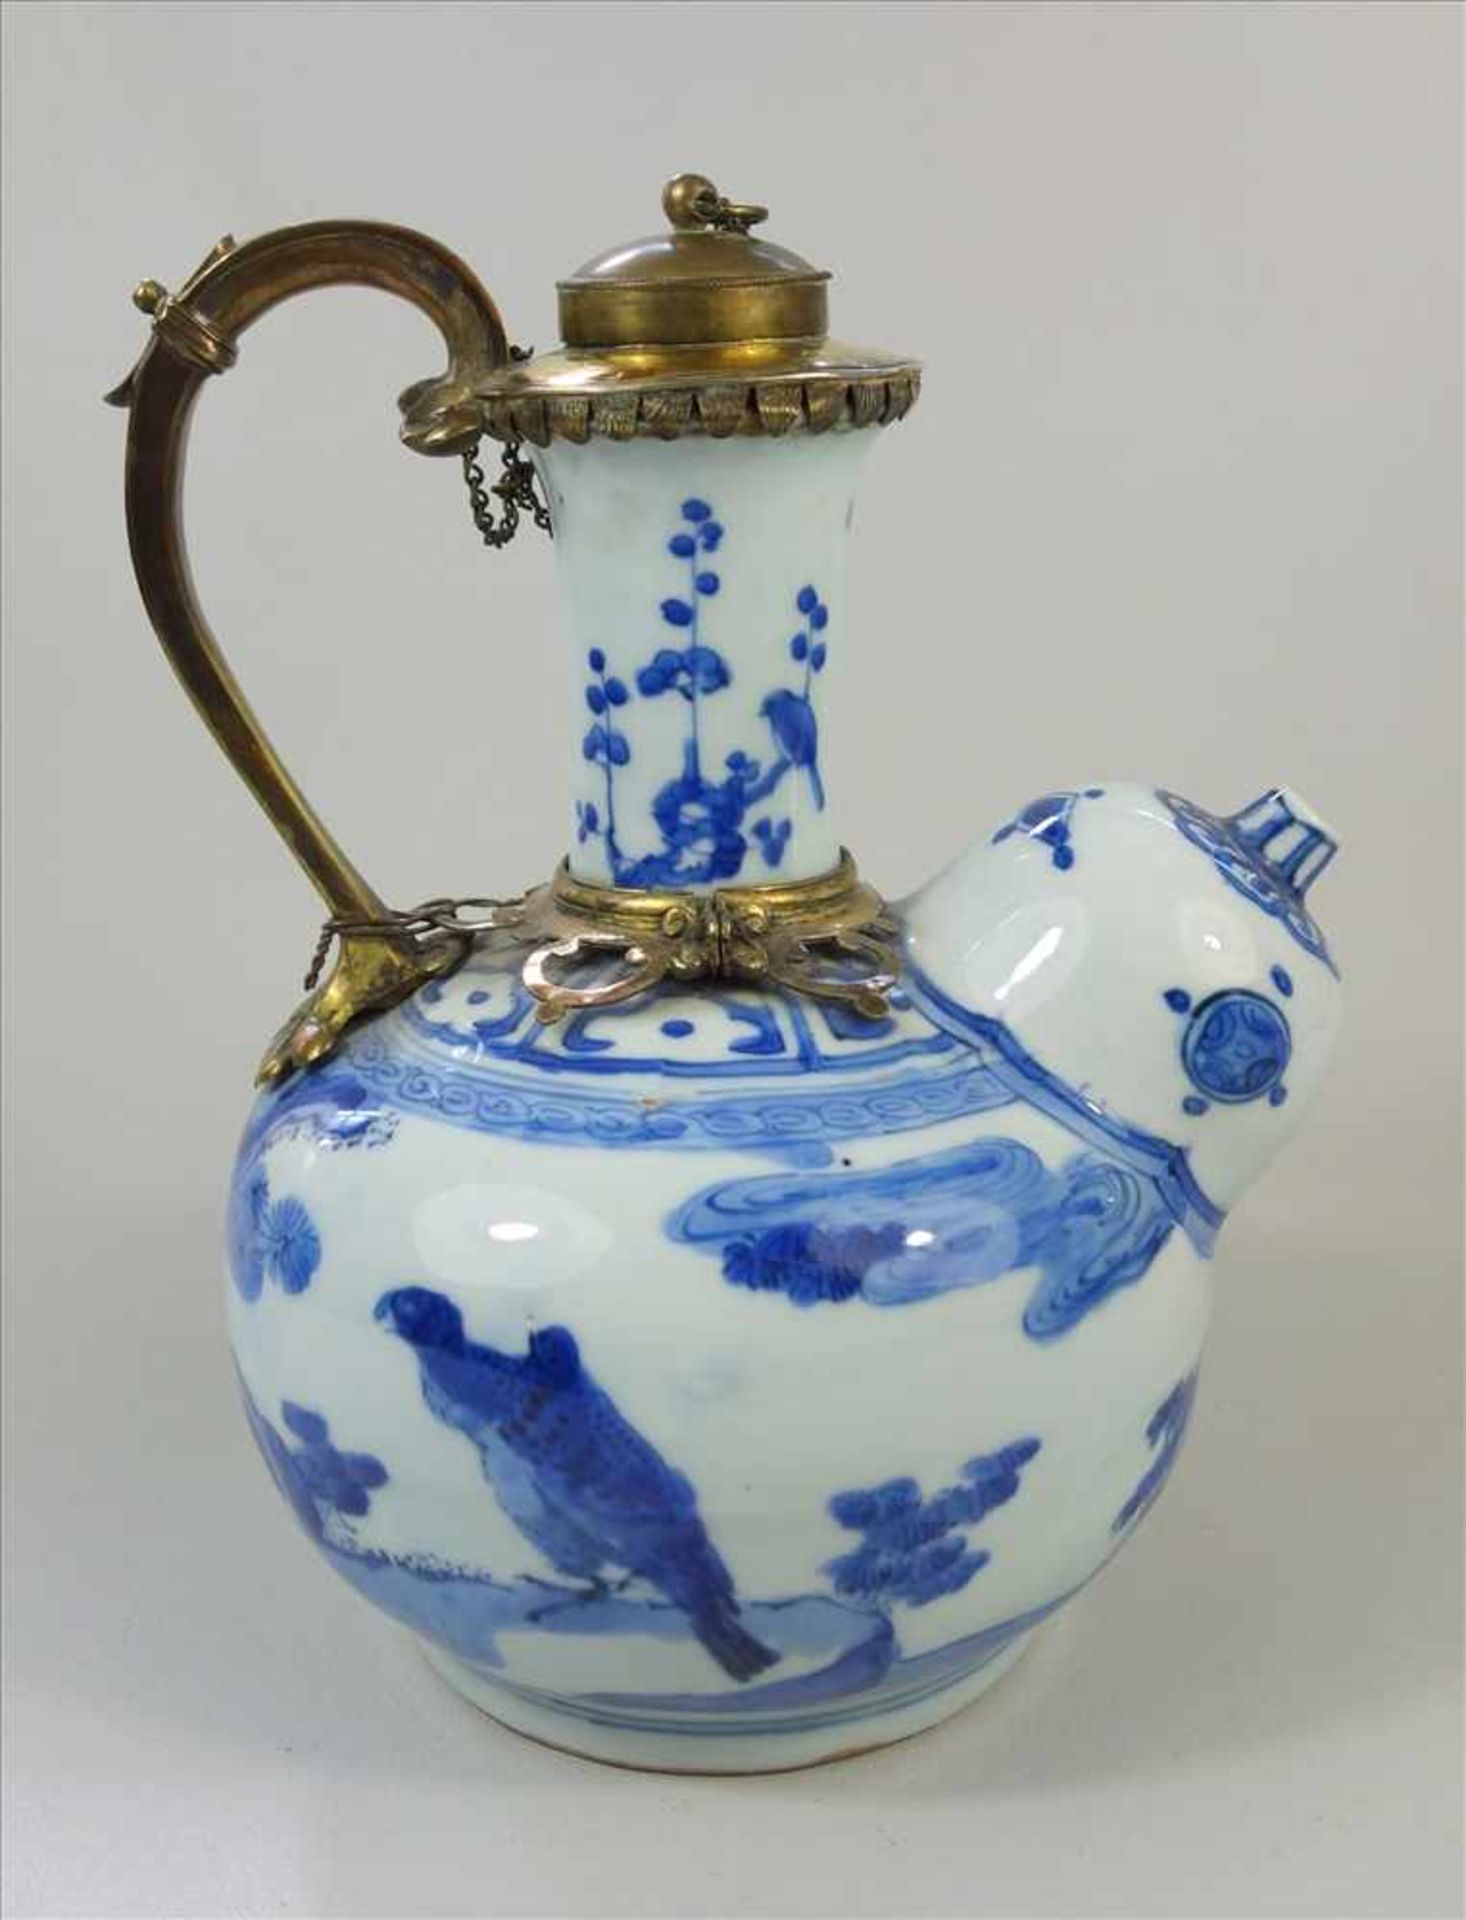 Kendi, wohl Ming, Wanli-Periode, China, 16./17.Jh., weißes Porzellan mit blauer Bemalung, vergoldete